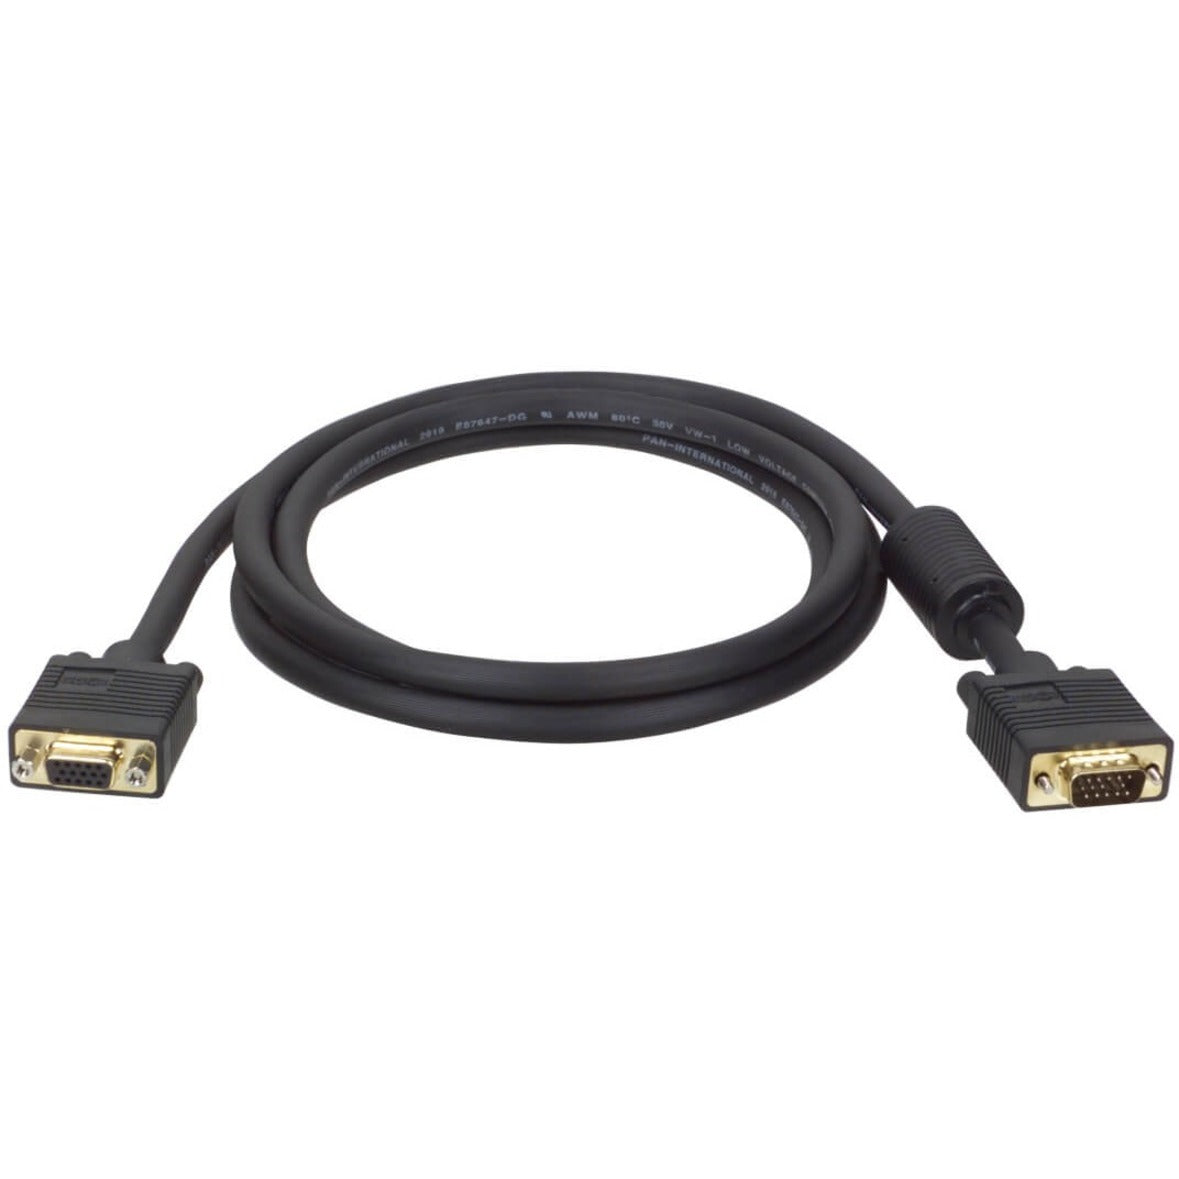 Tripp Lite P500-010 SVGA/VGA Monitor Extension Cable, 10ft, Molded, Copper Conductor